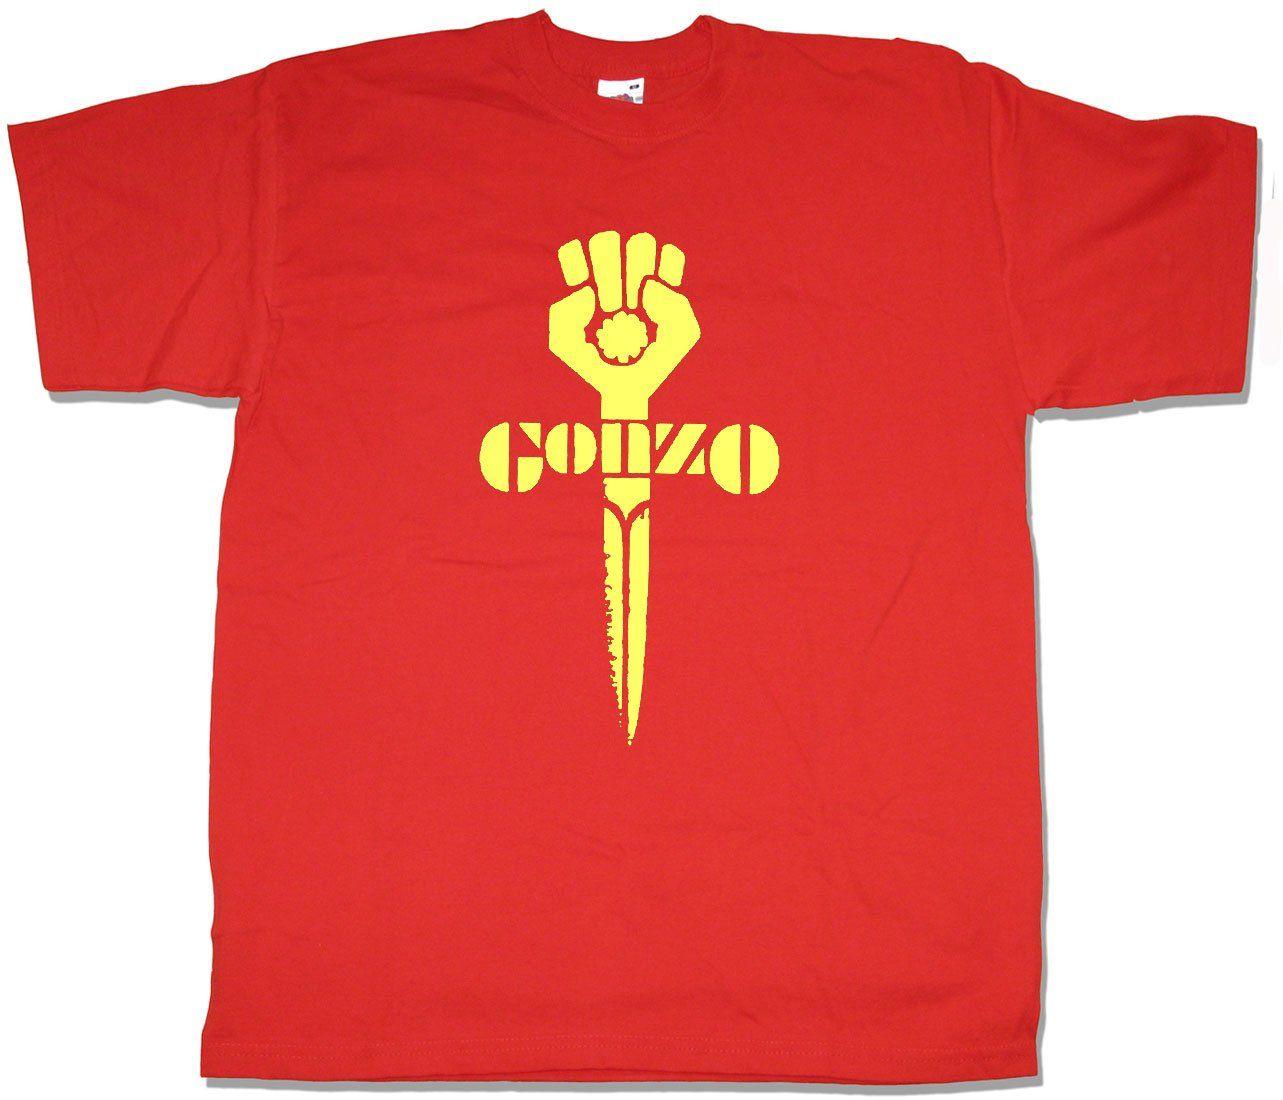 Gonzo Logo - Gonzo Logo T shirt for Hunter S Thompson afficionados. Pop Culture